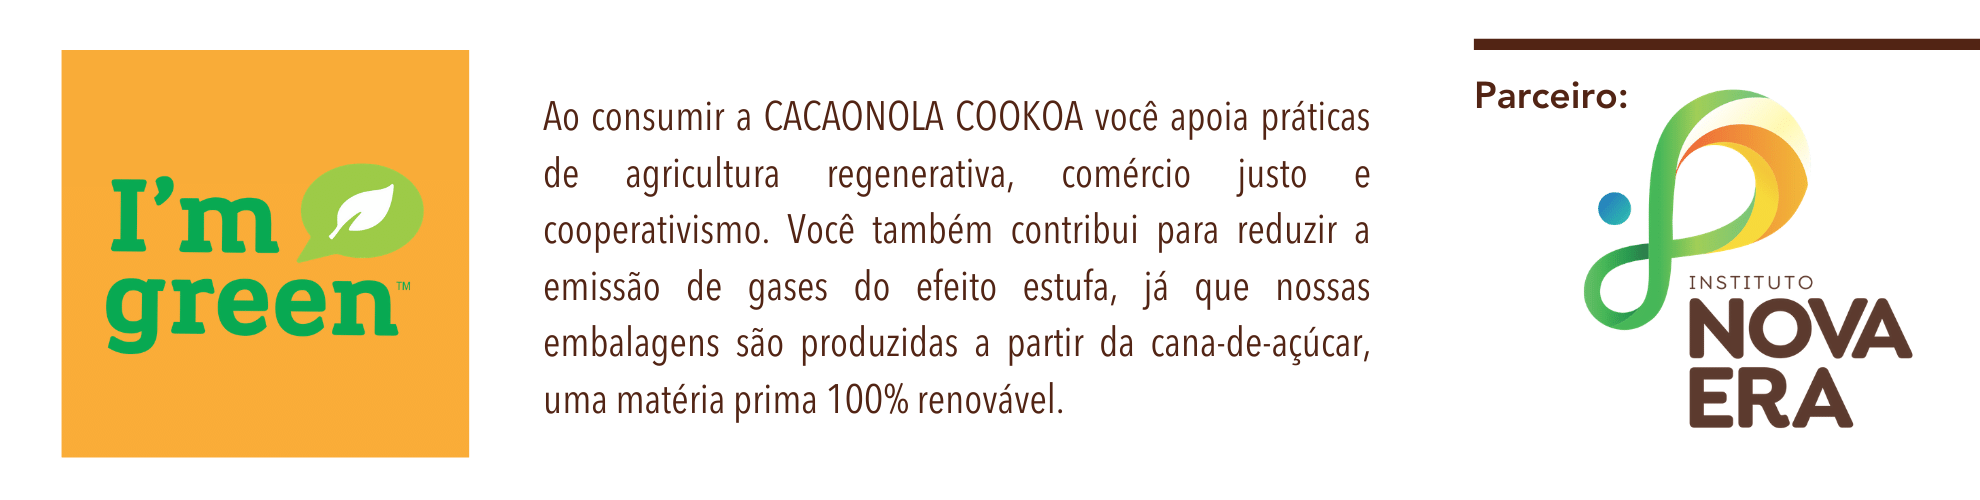 im green cacaonola